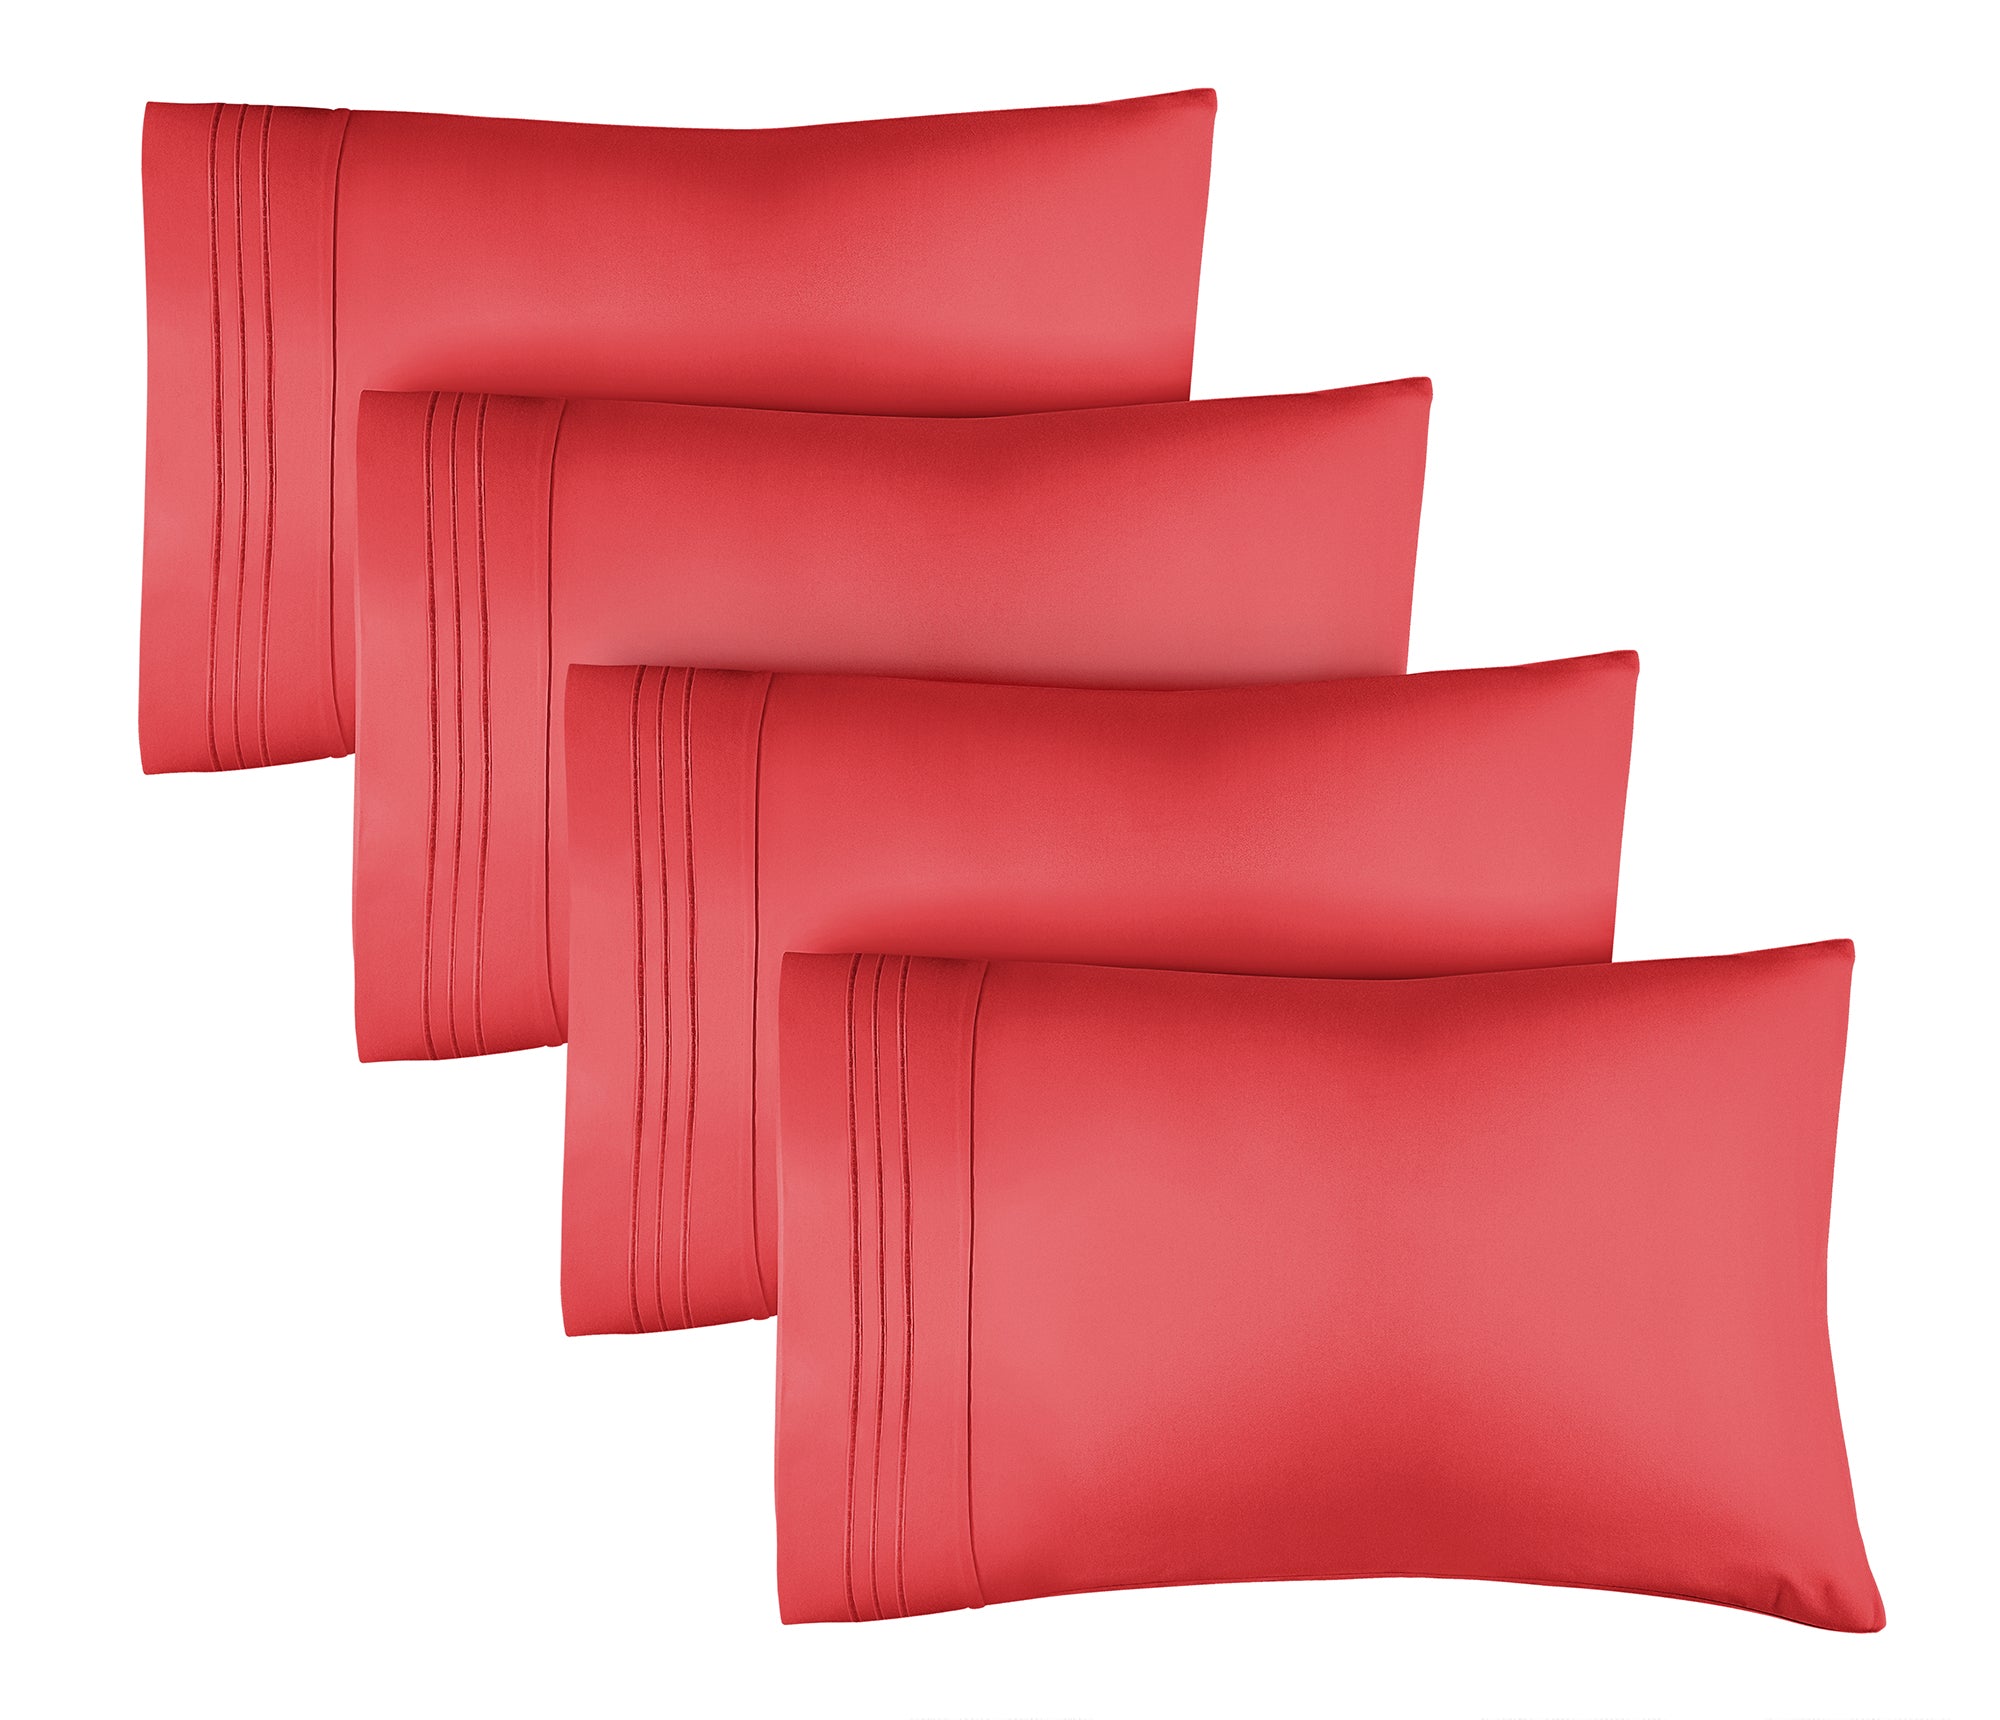 4 Pillowcase Set - Red